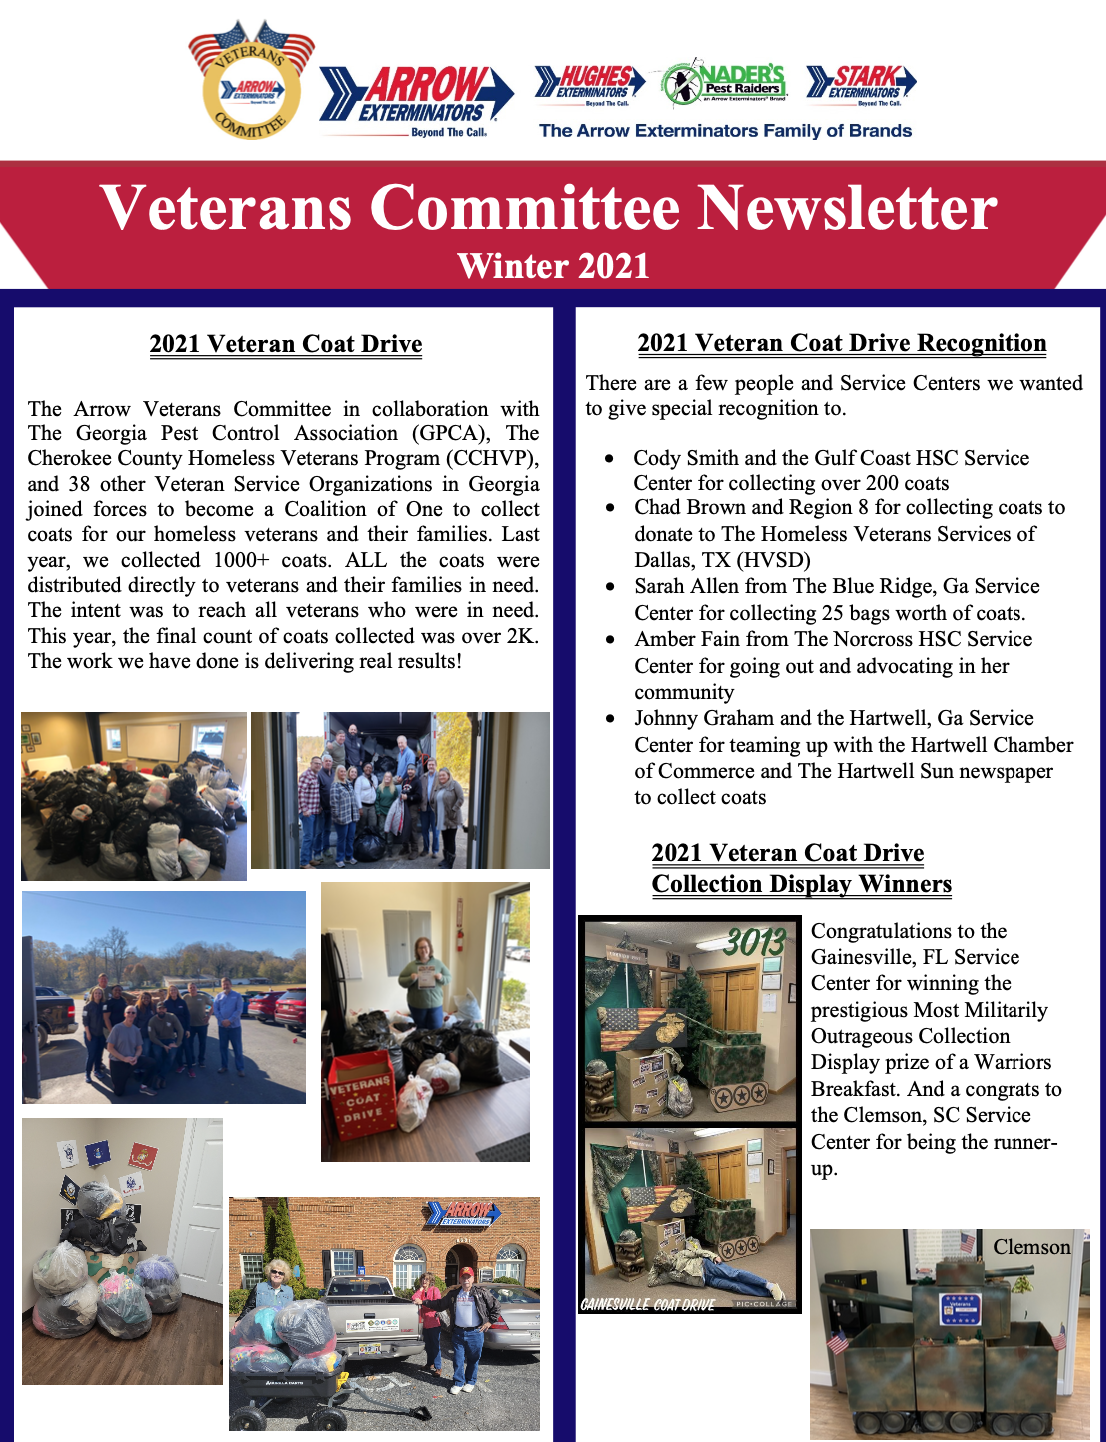 Veterans Committee Newsletter Winter 2021.